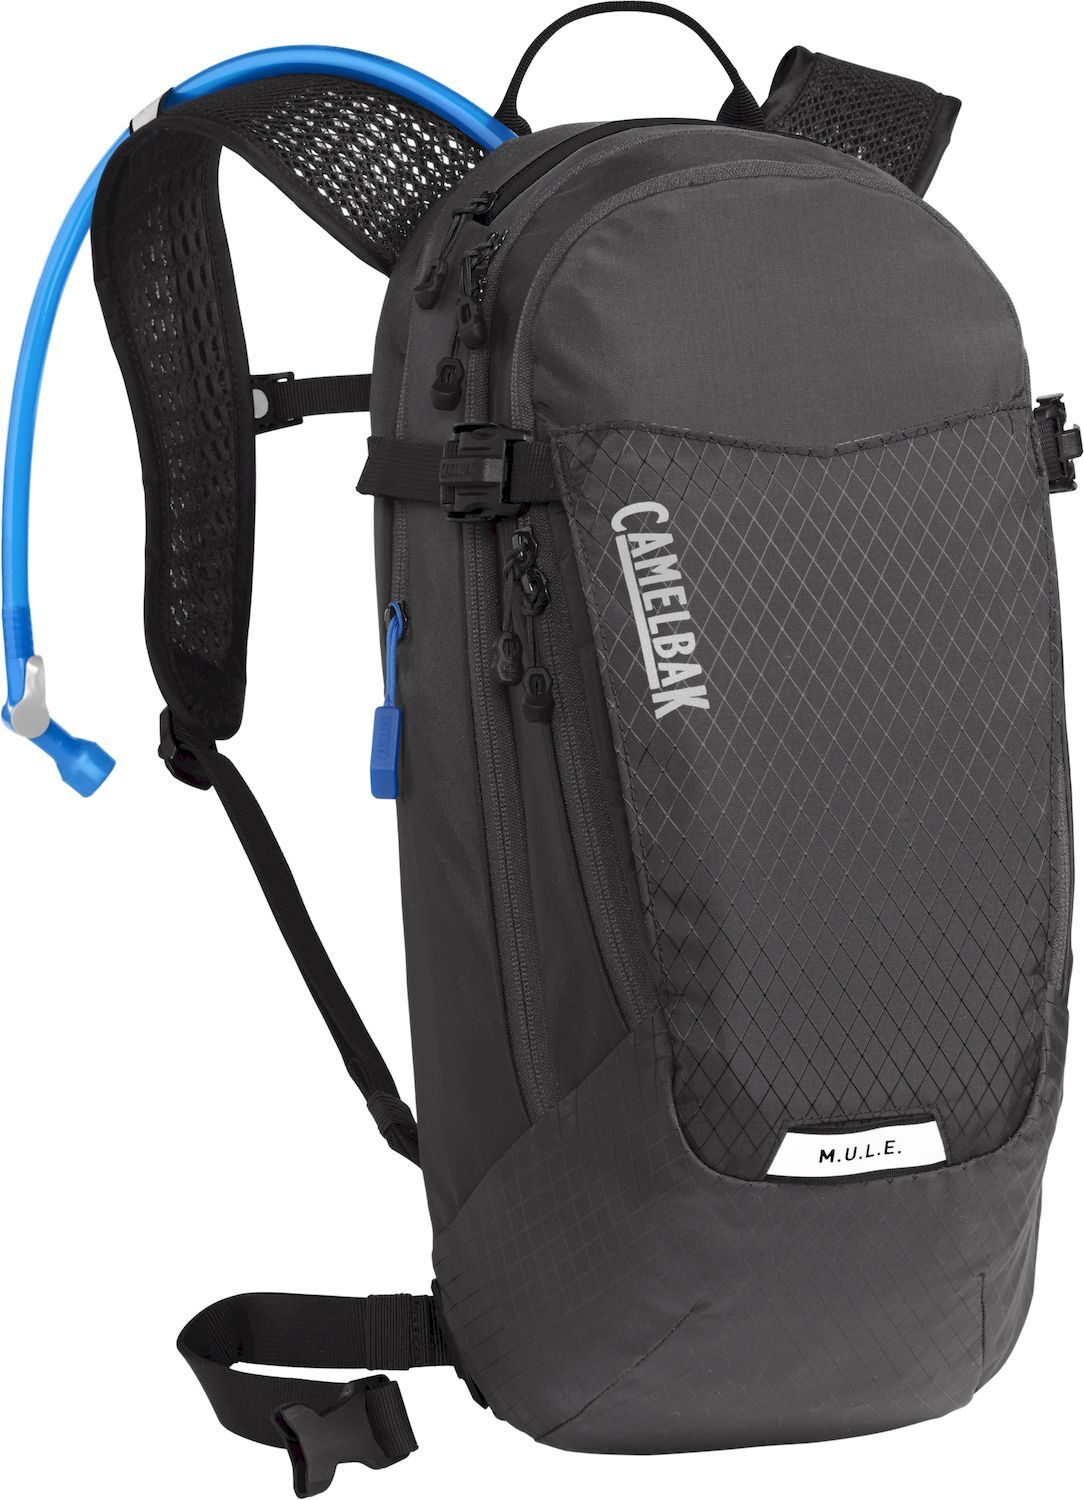 Camelbak M.U.L.E. 12L - Hydration backpack - Women's